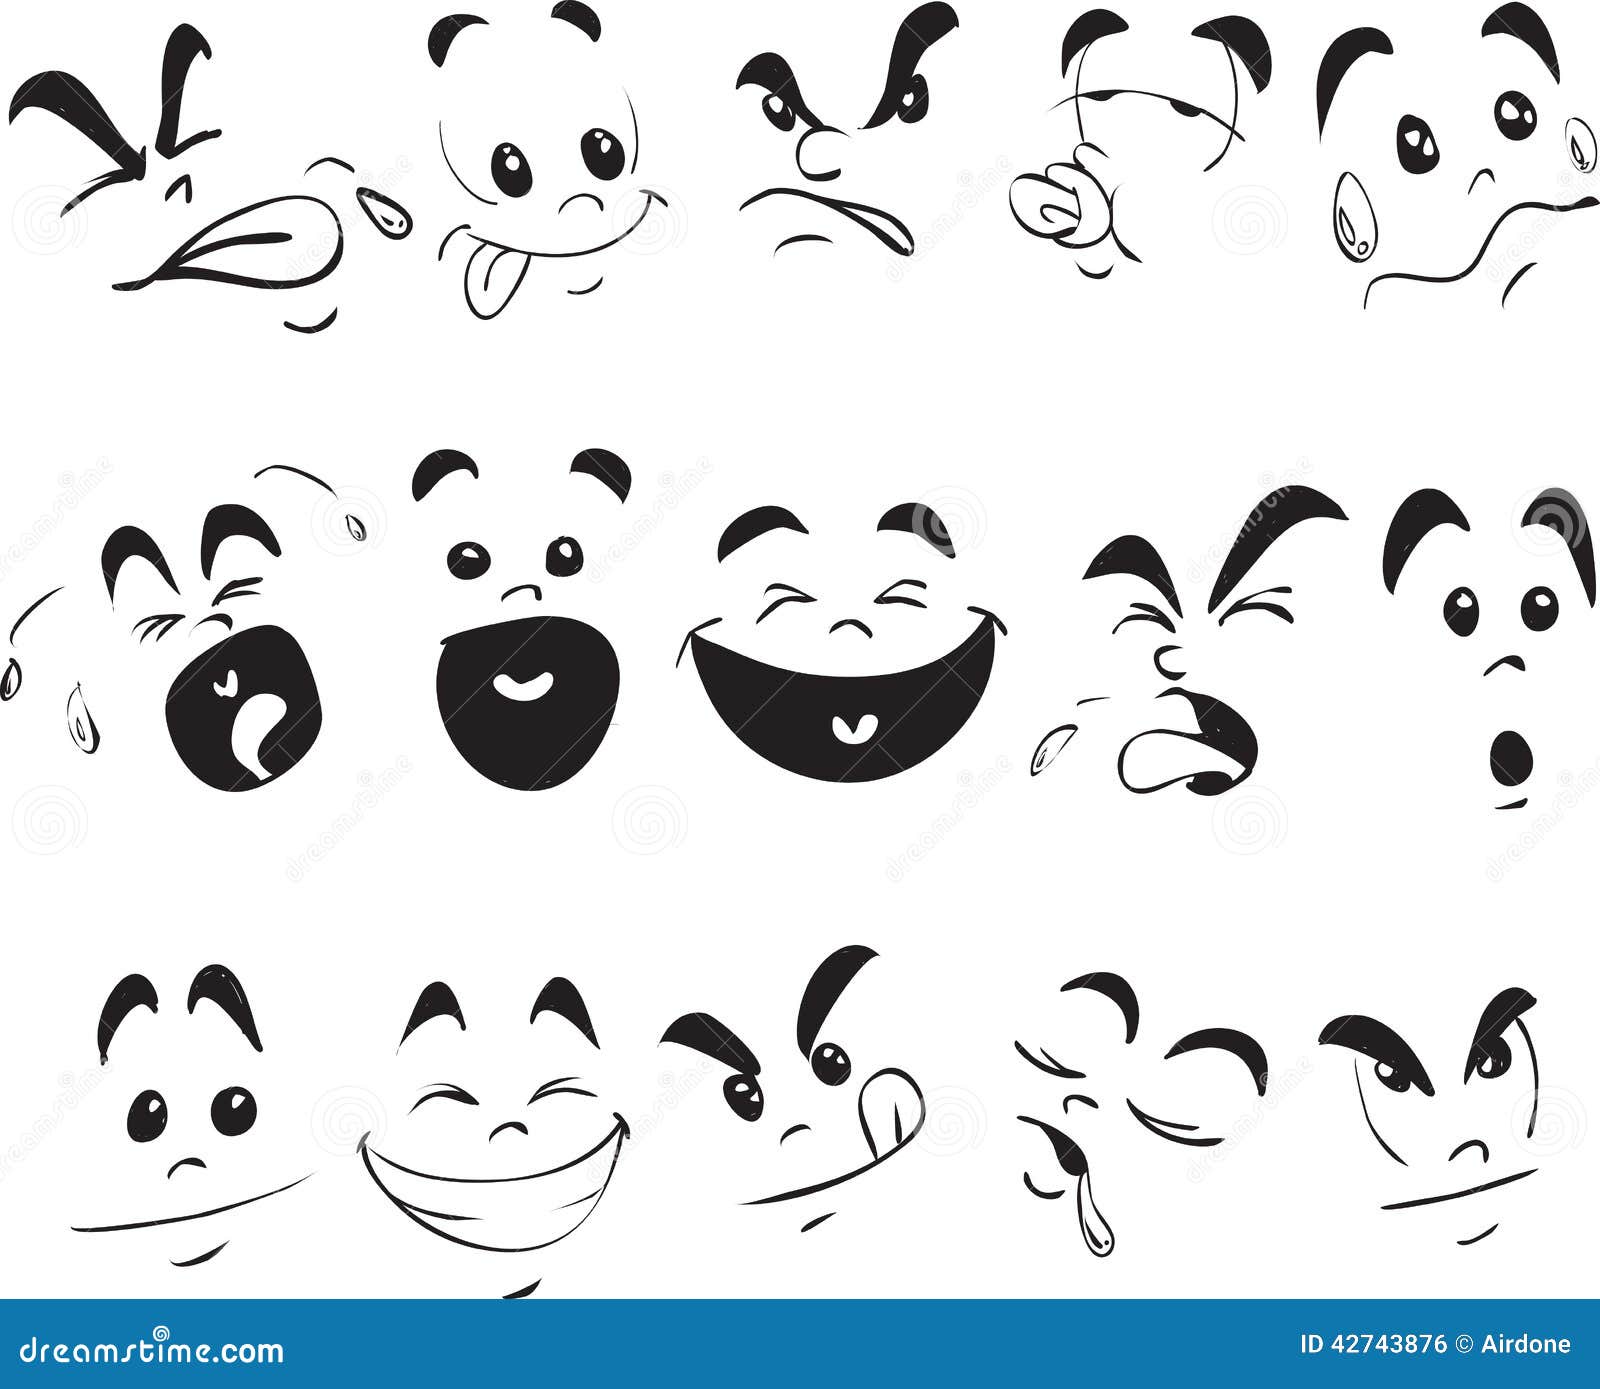 Children Face Expression Doodle Stock Vector Illustration Of Black